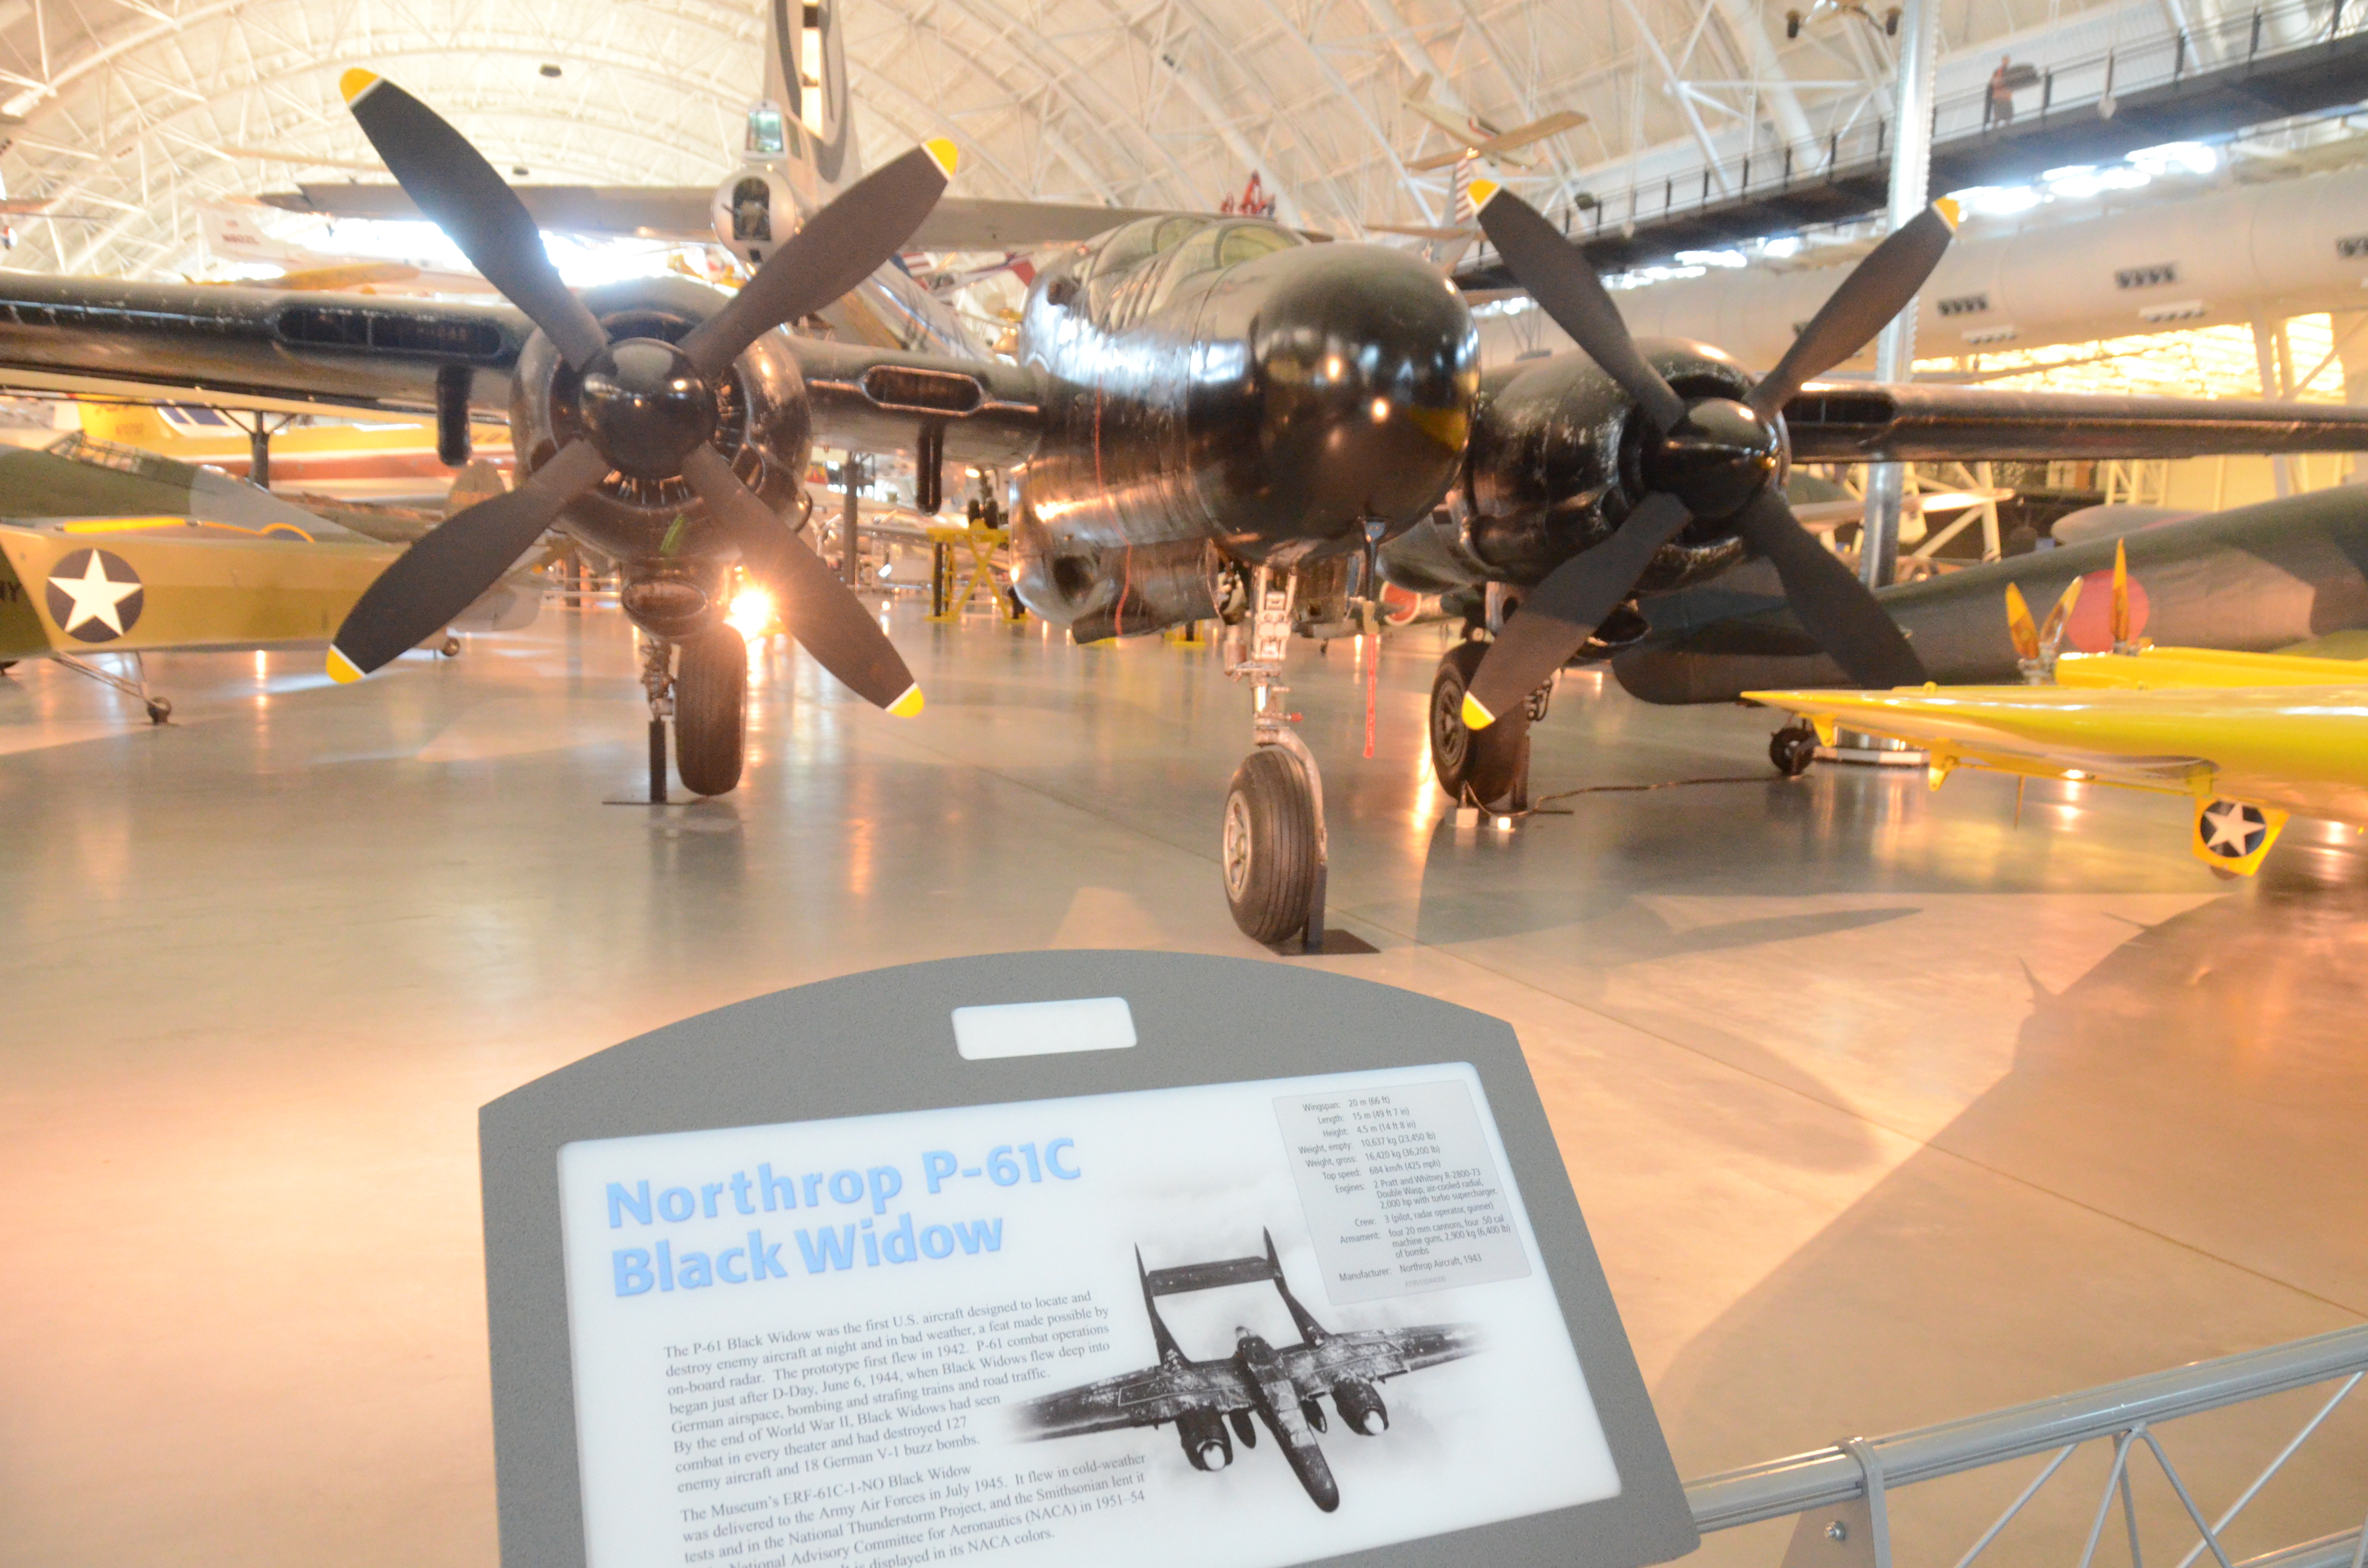 Steven F. Udvar-Hazy Center: Northrop P-61C Black Widow